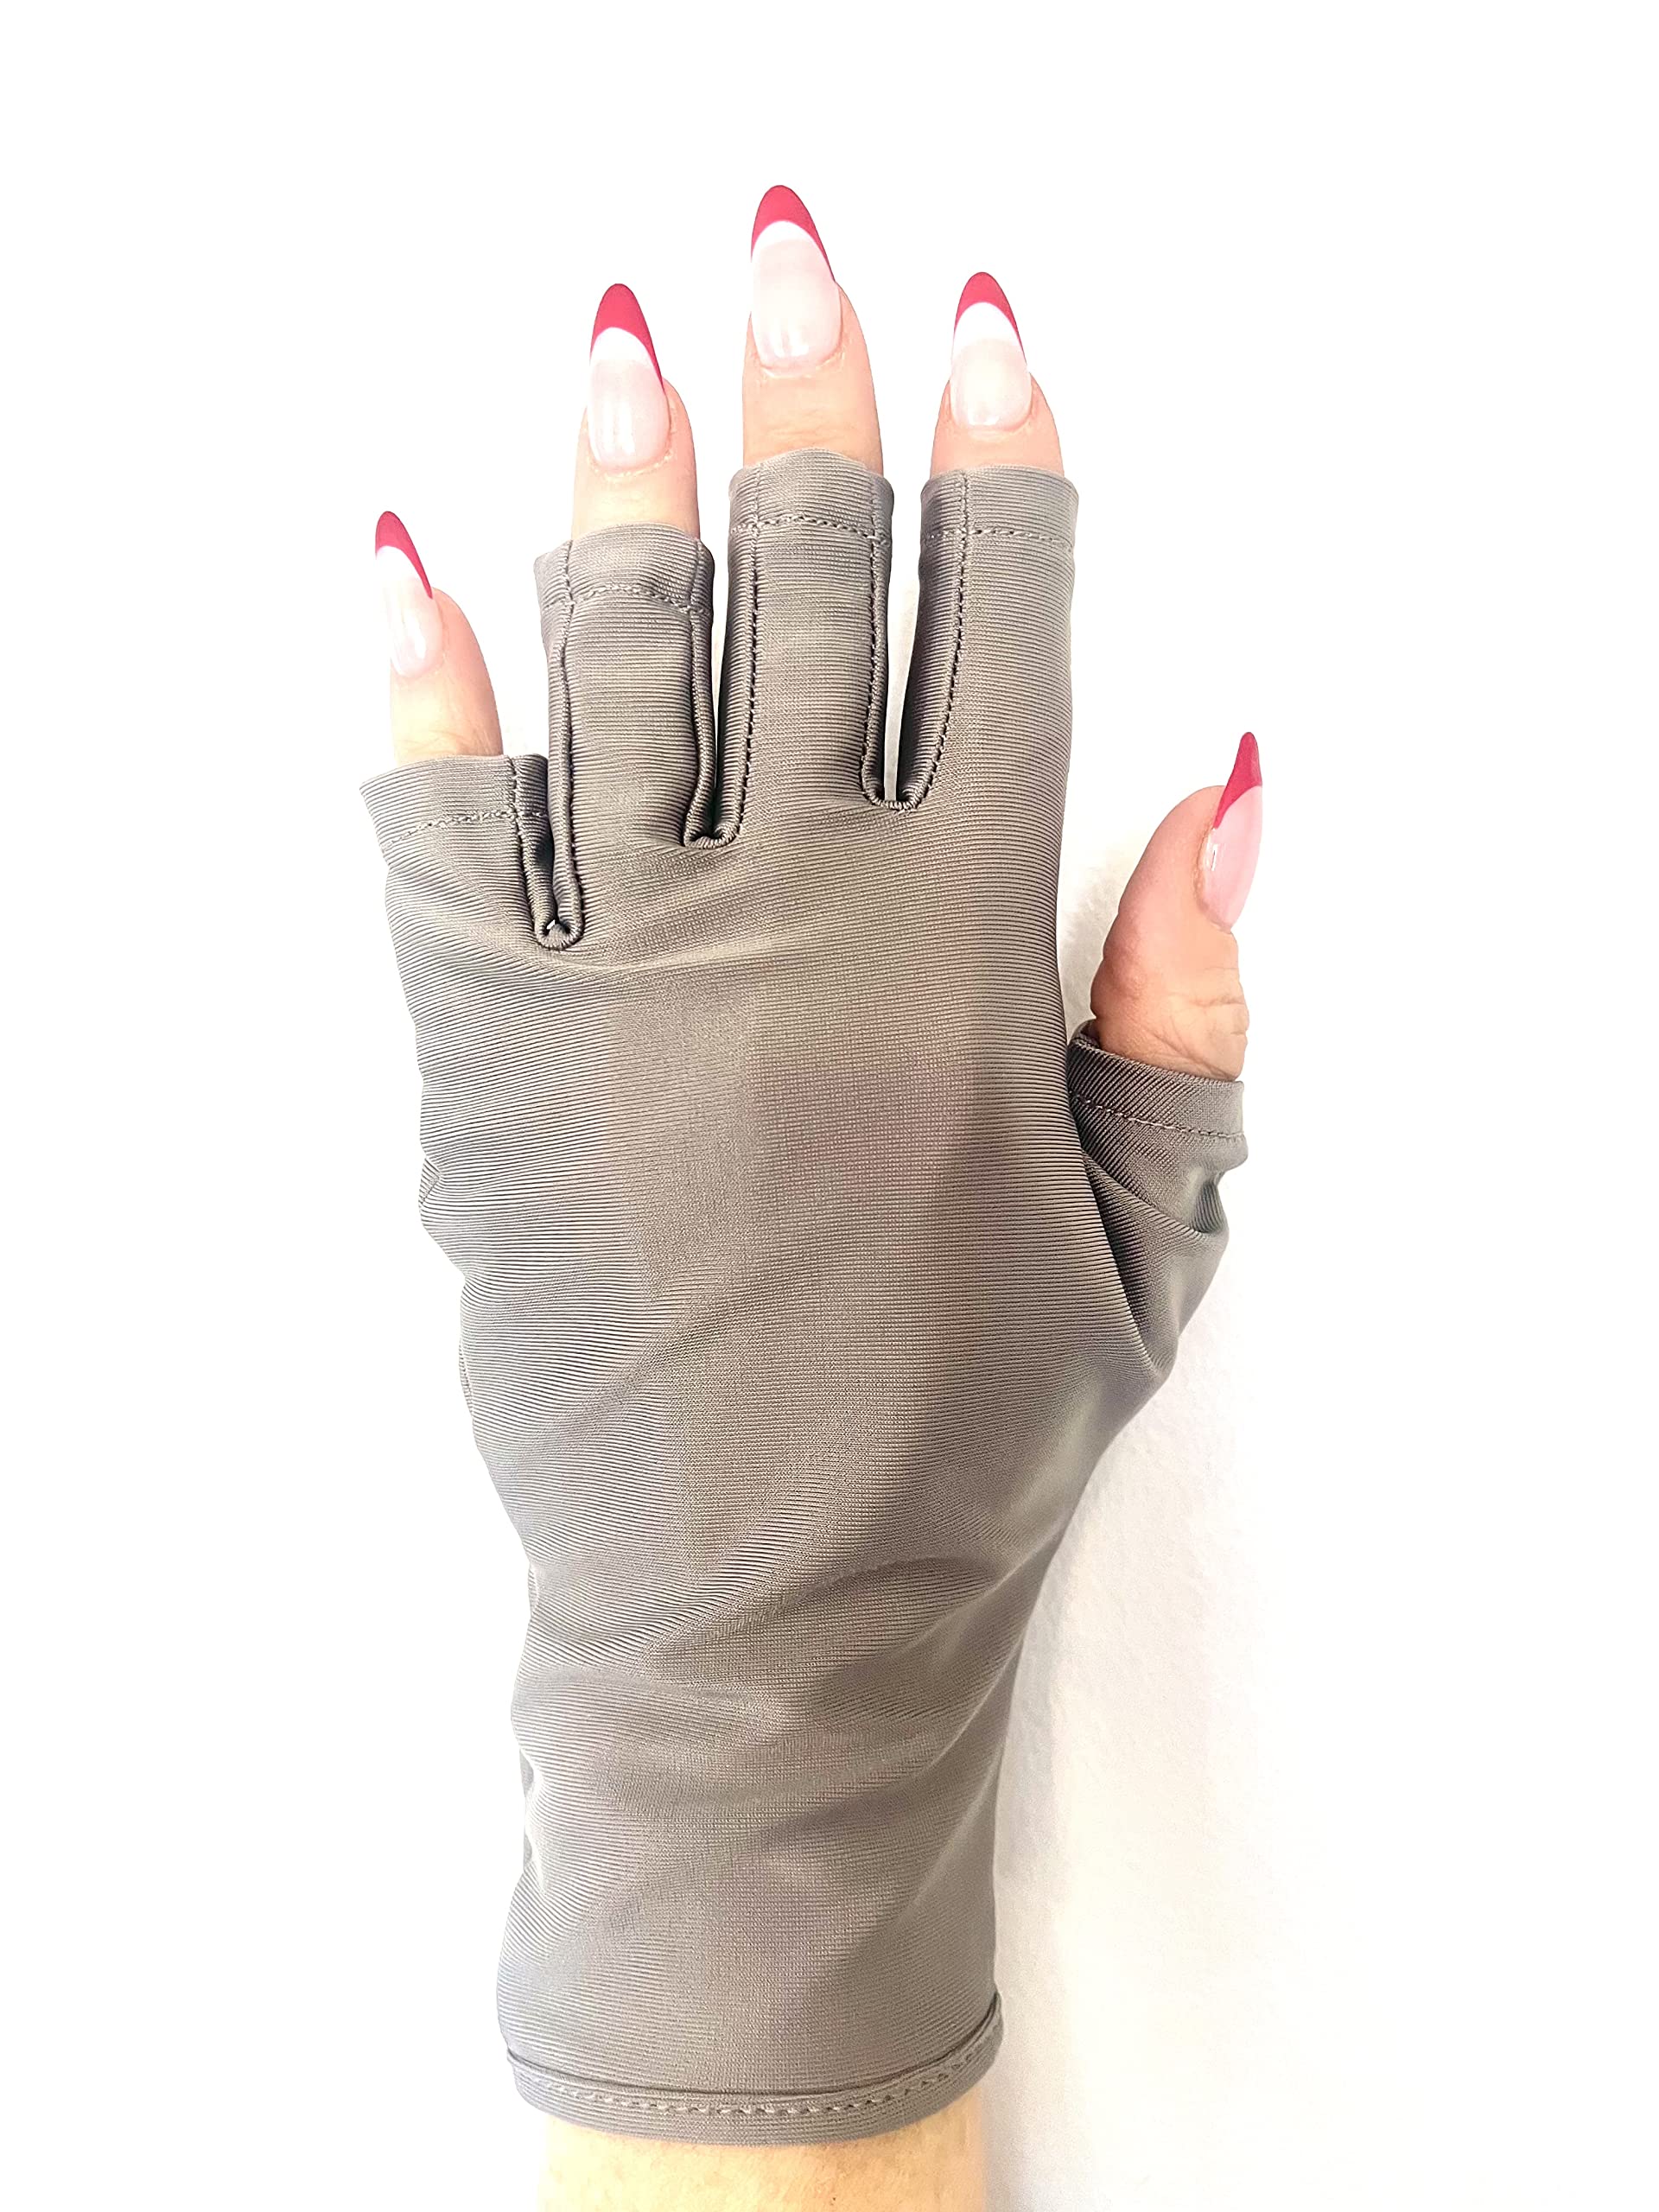  ManiGlovz - The ORIGINAL UPF 50+ UV Light Protective Nail  Gloves, Gel Manicure Gloves and Anti UV Fingerless Gloves for Women